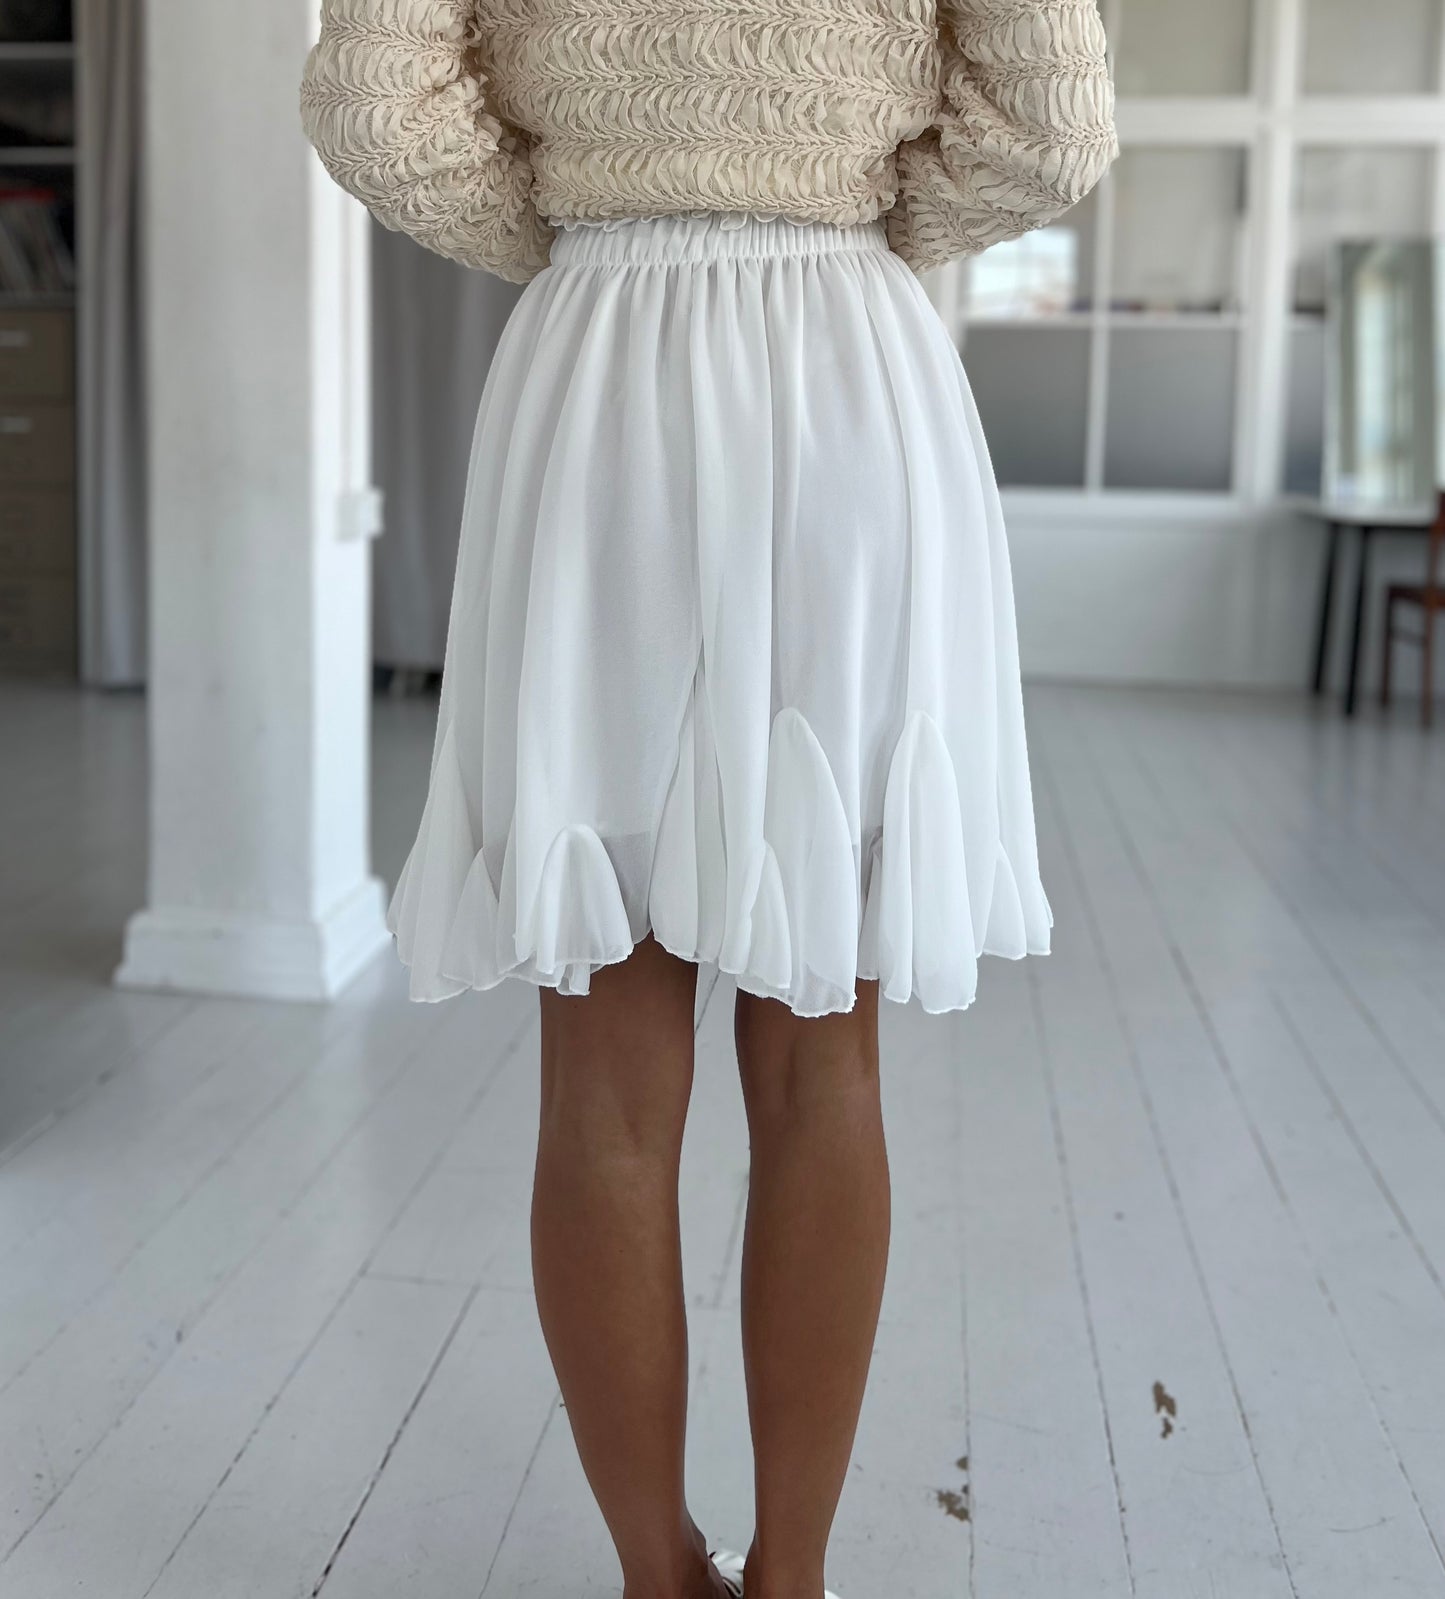 Schilo-Jolie white skirt (6356)